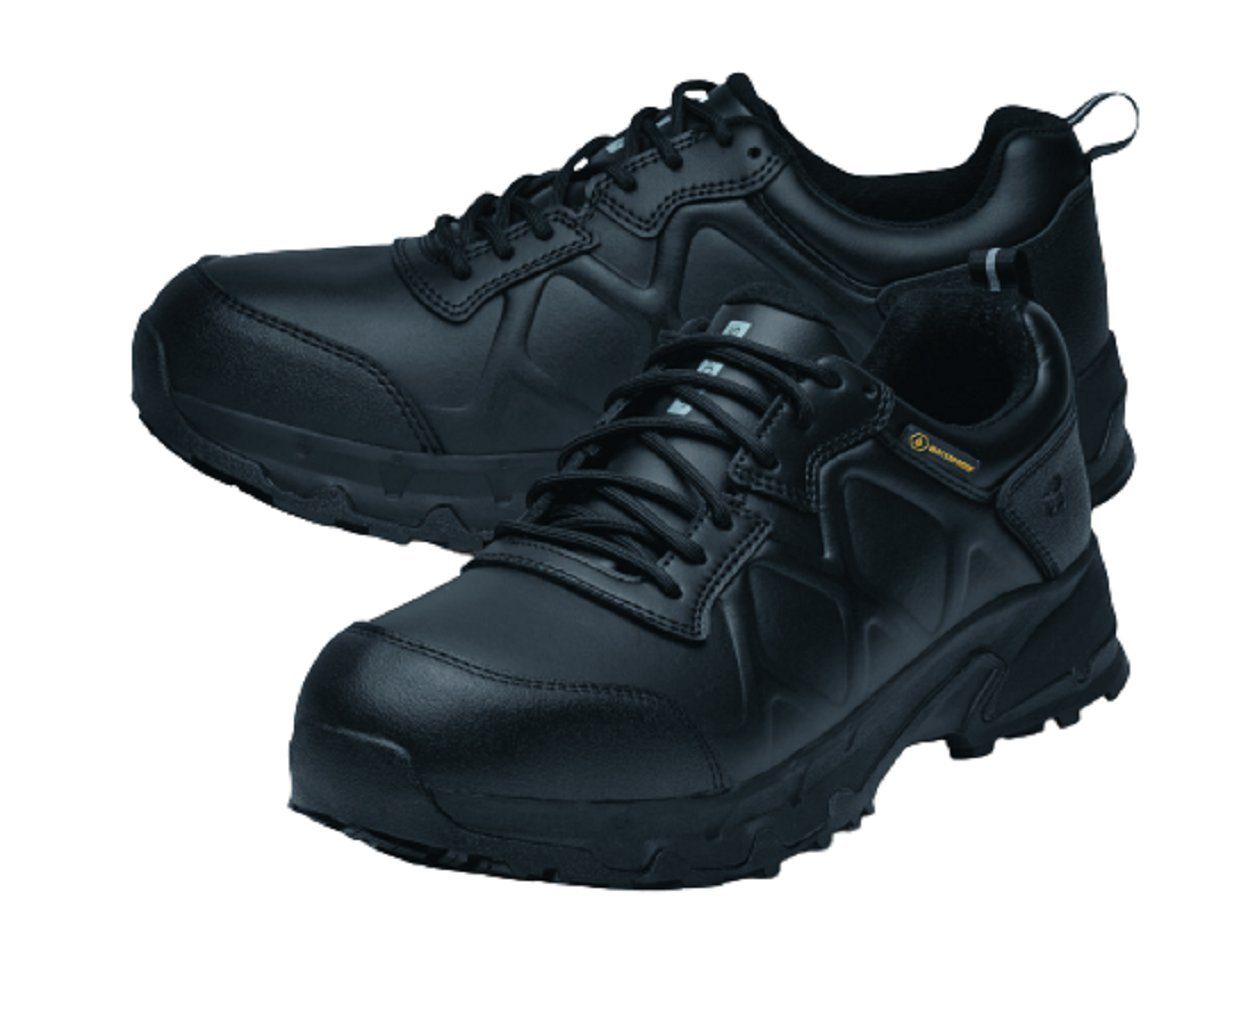 HI Hiker-Schuhe schwarz, Low SRC Crews O2 For Sicherheitsschuh wasserdicht Callan ESD, Shoes CI